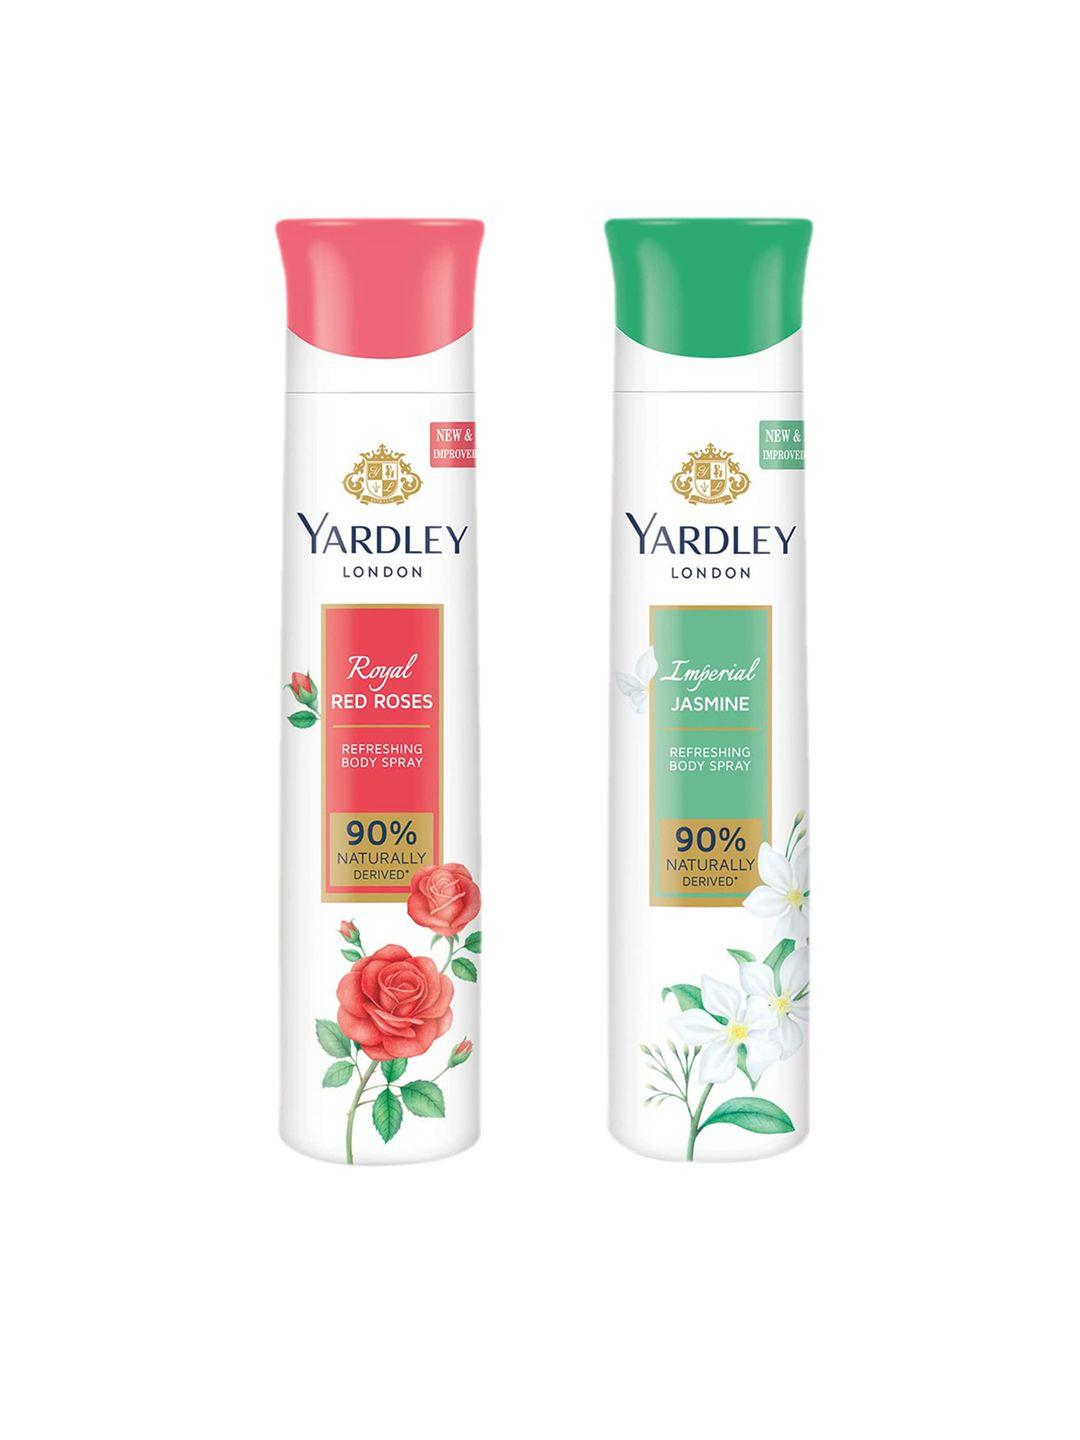 yardley london women set of 2 deodorant - royal red roses & imperial jasmine - 150ml each